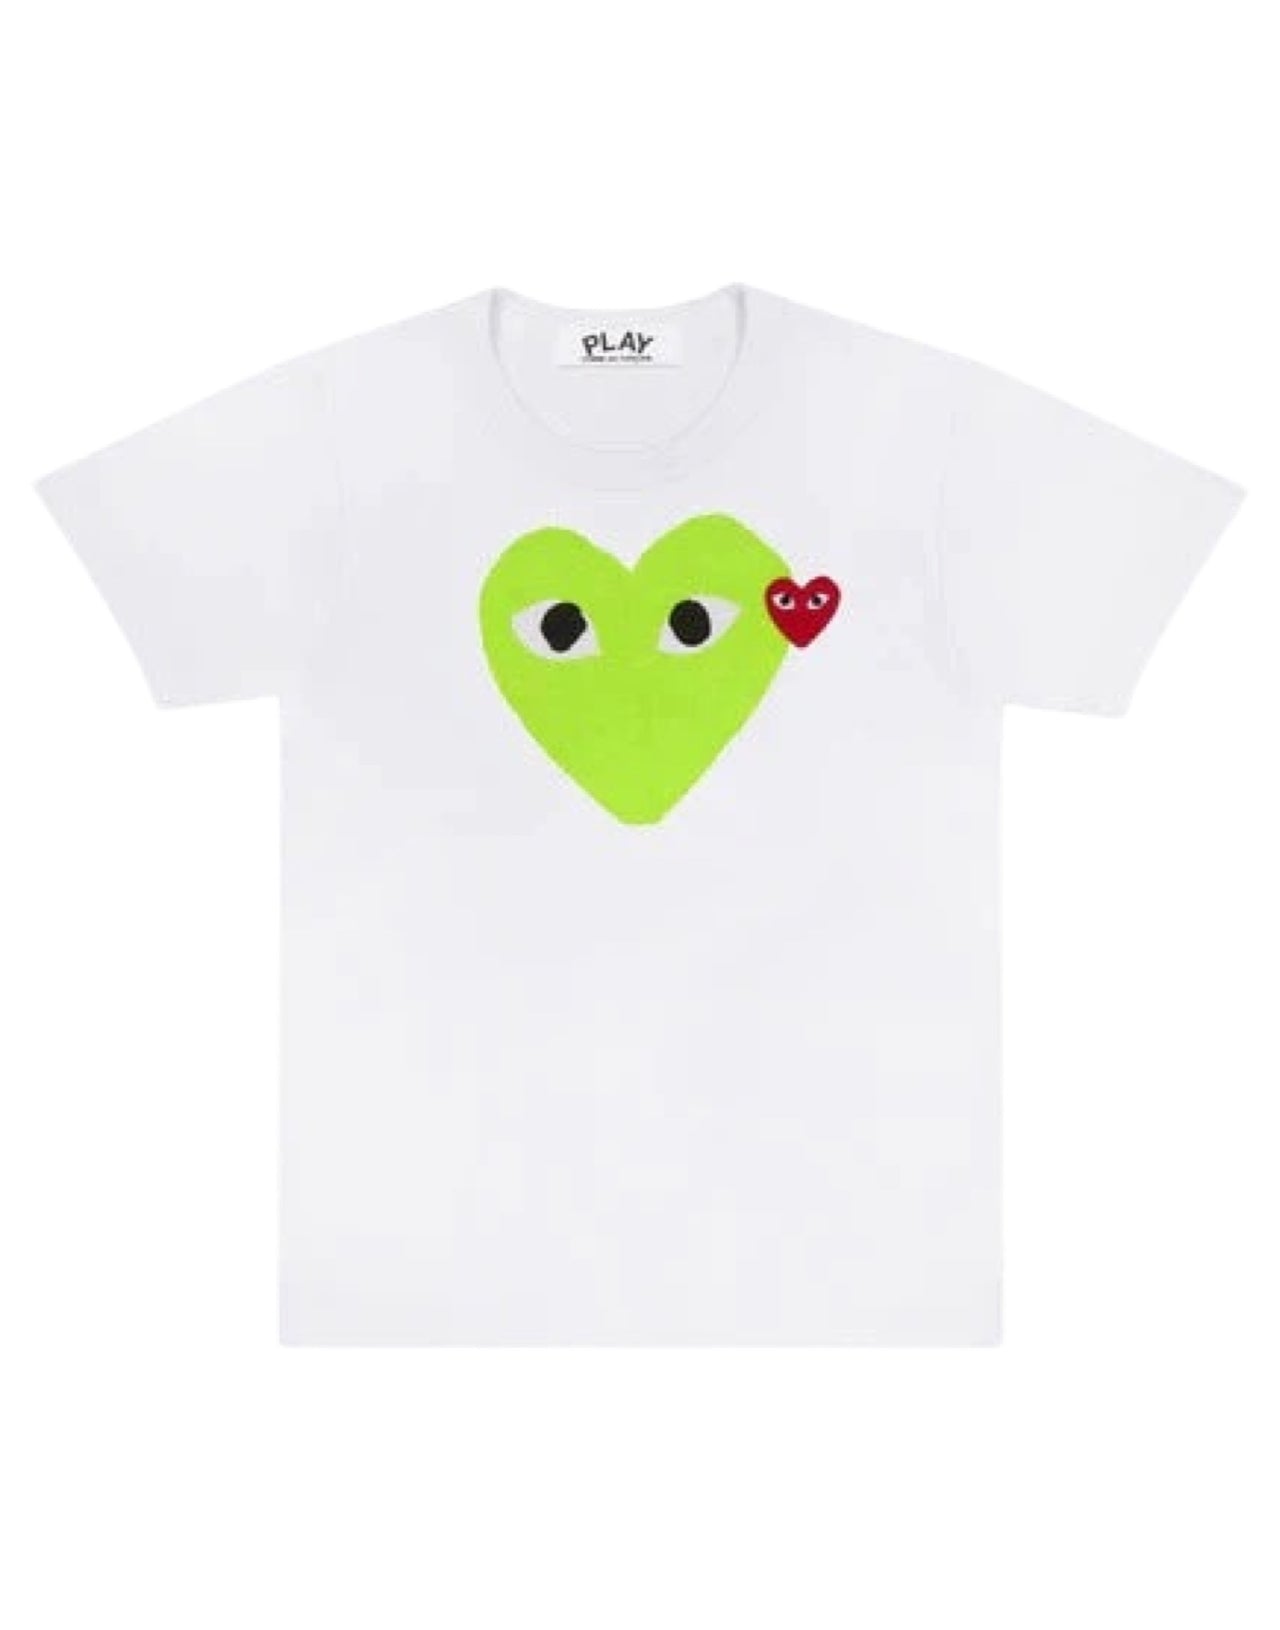 Cdg Play T-shirt Heart White Lime